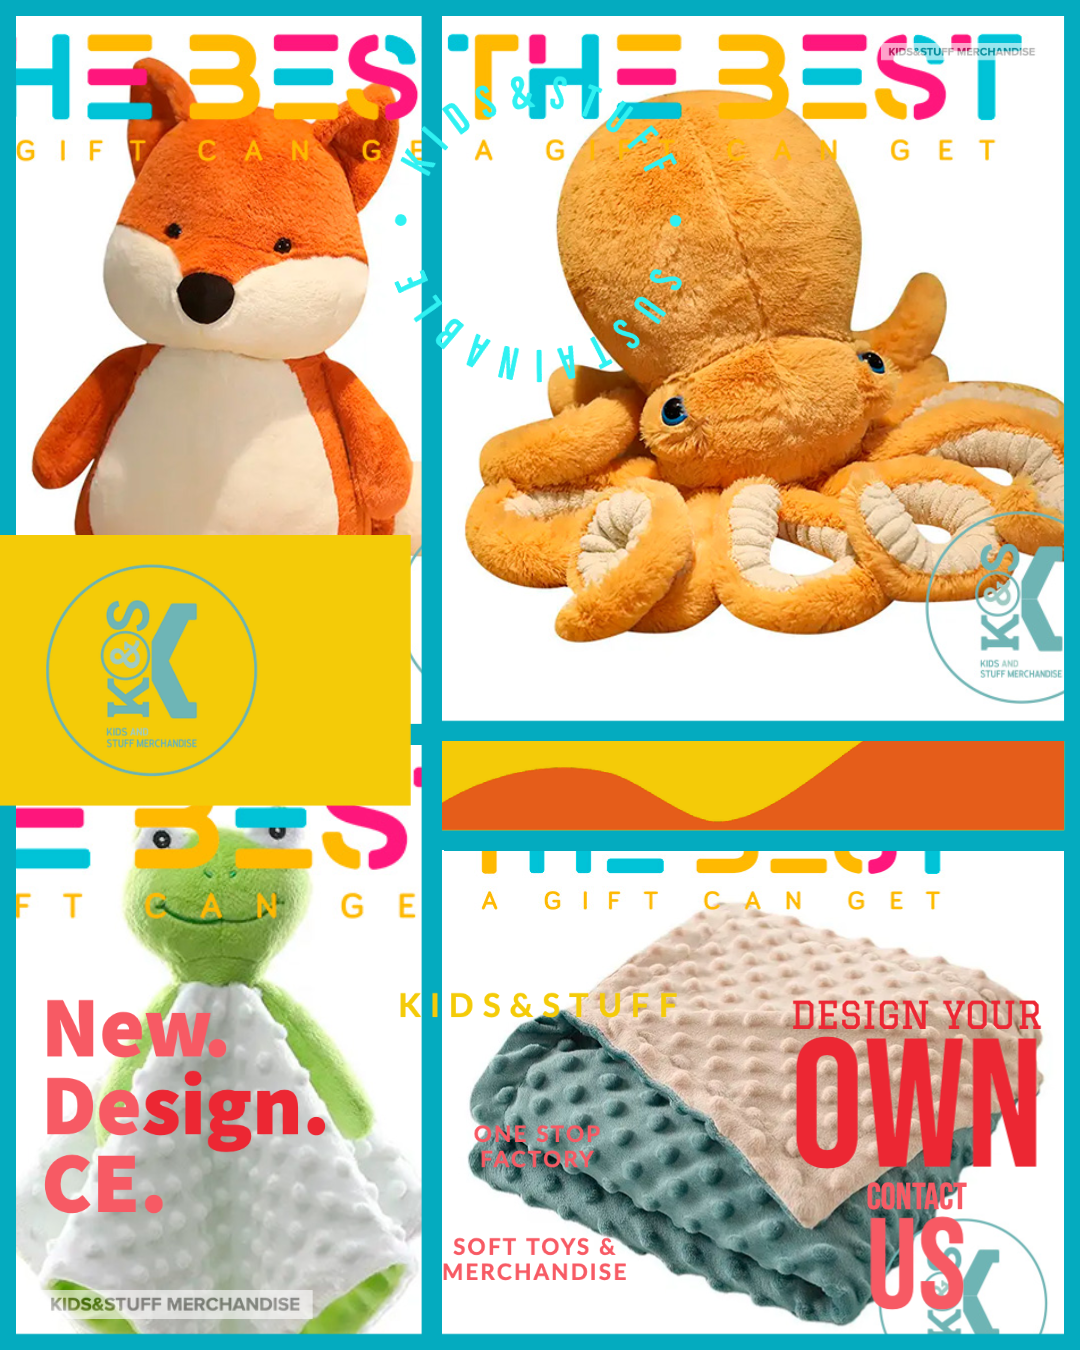 Custom Made Plush Toys - Plush Toys Factory ⎟Kids and Stuff Merchandise Ltd.